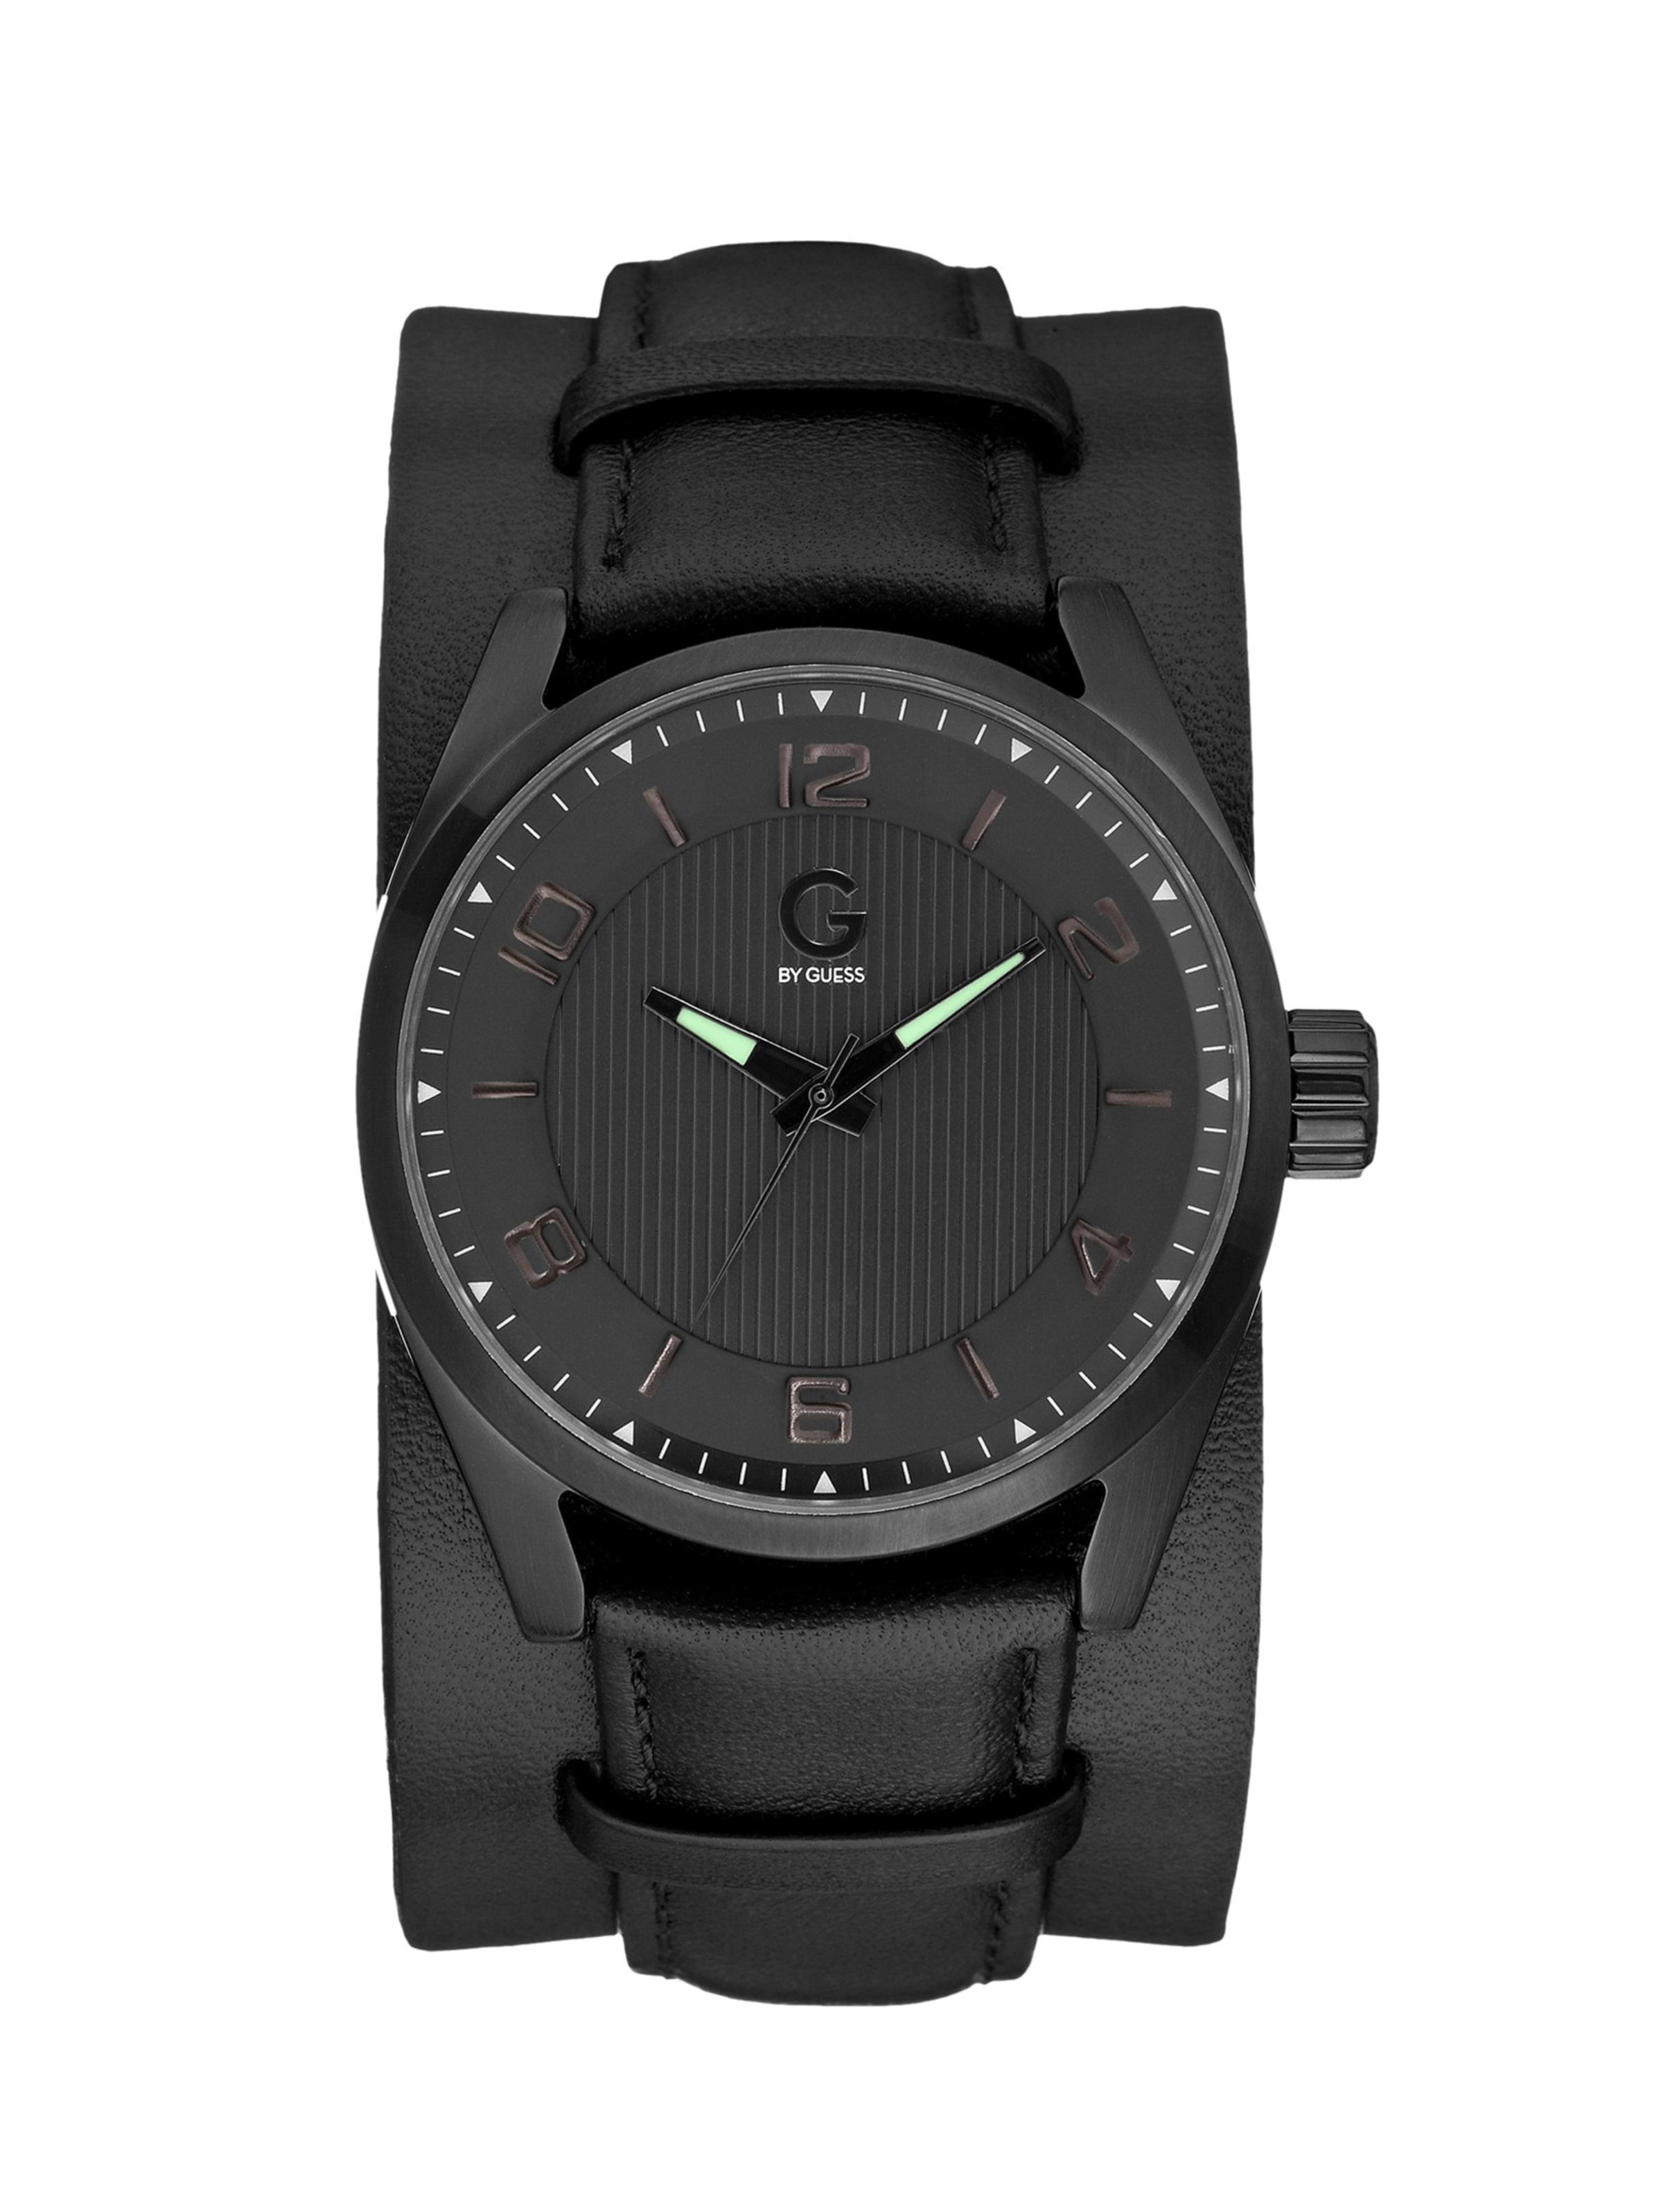 black leather cuff watch